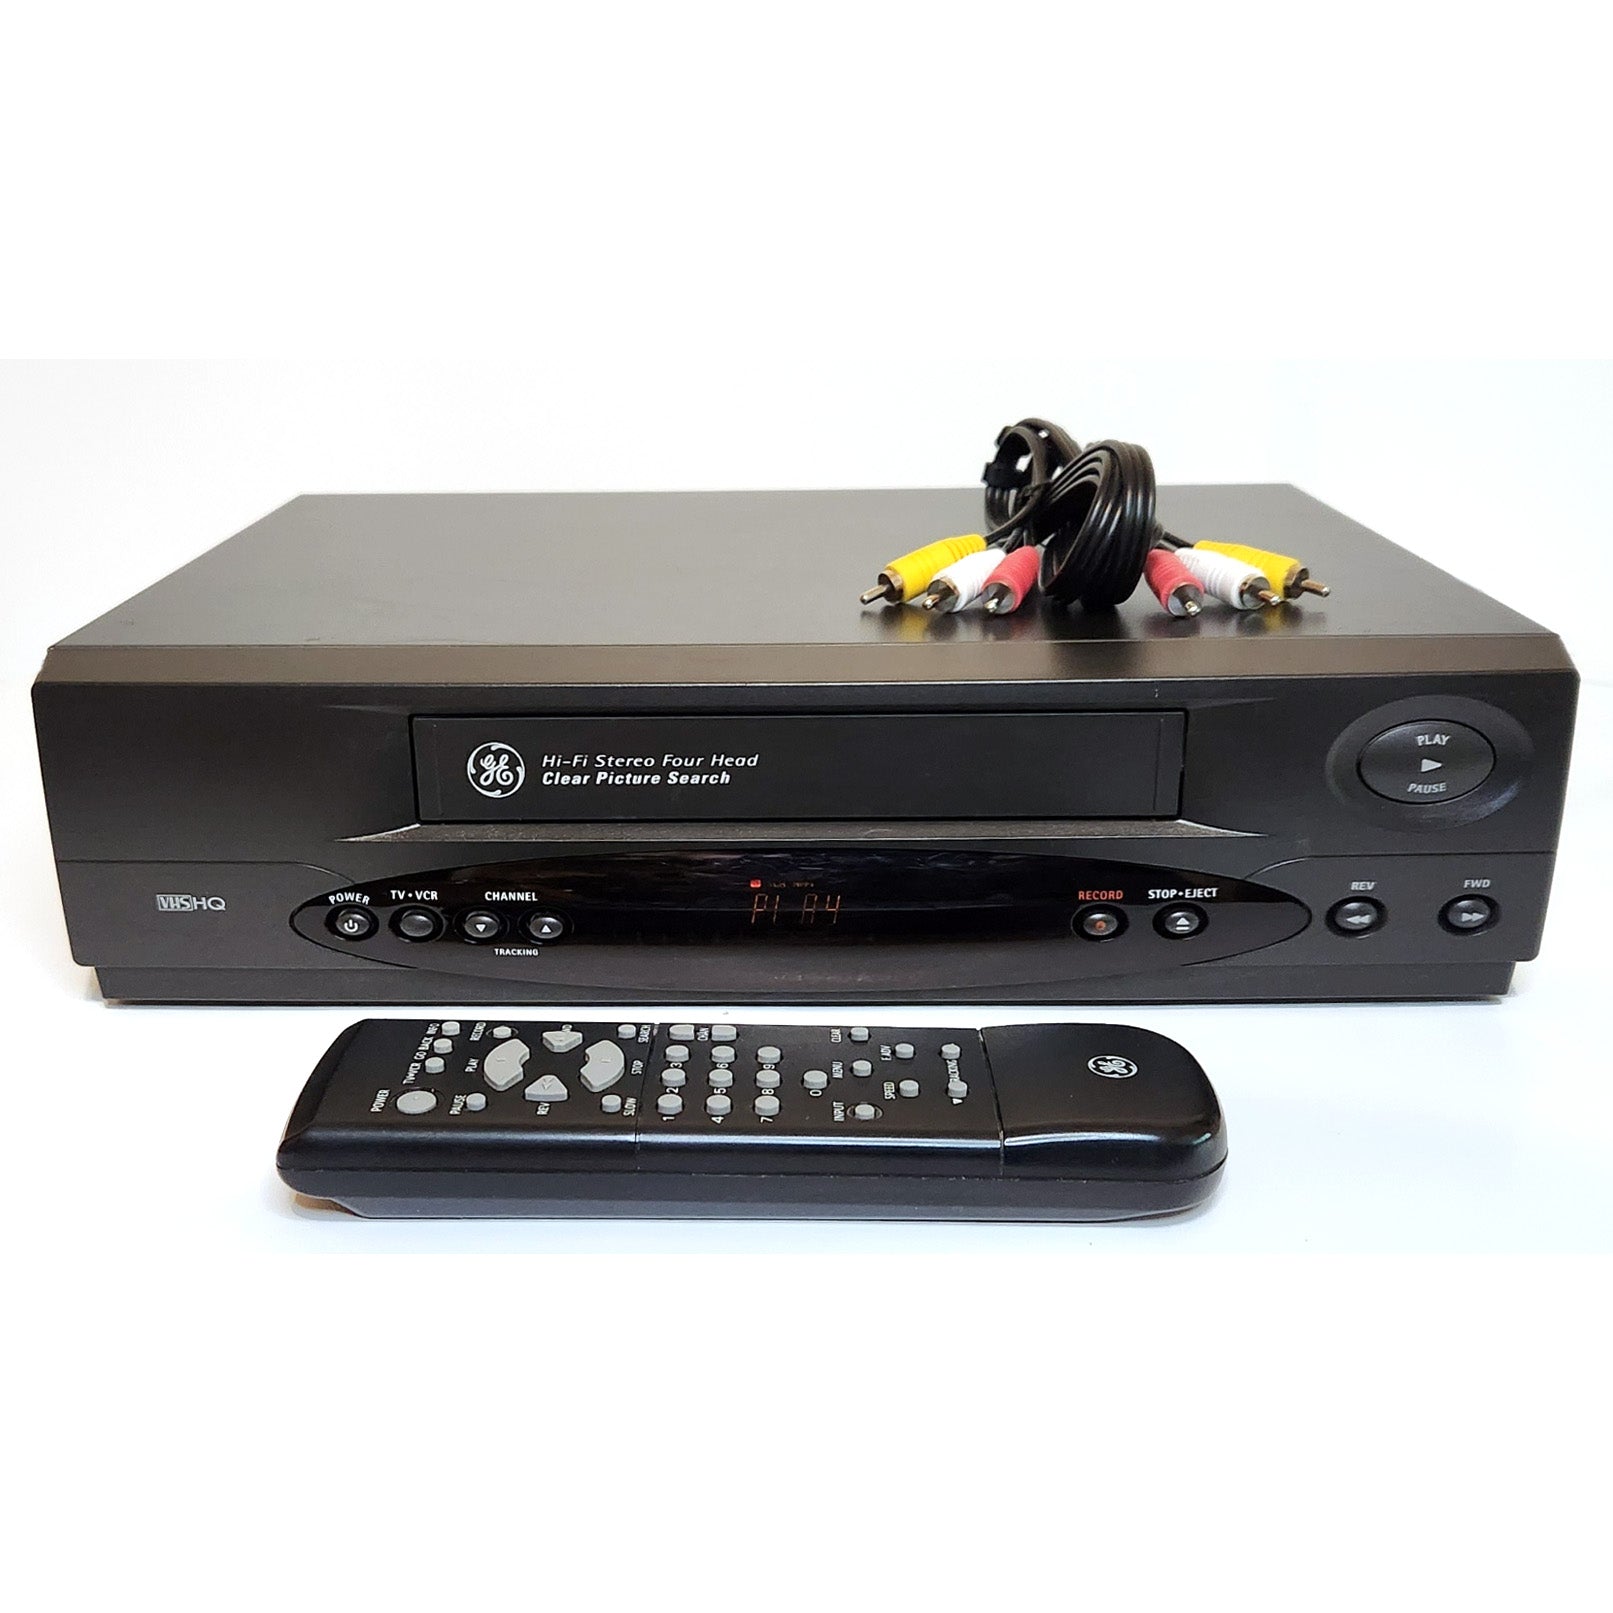 GE VG4241 VCR, 4-Head Hi-Fi Stereo